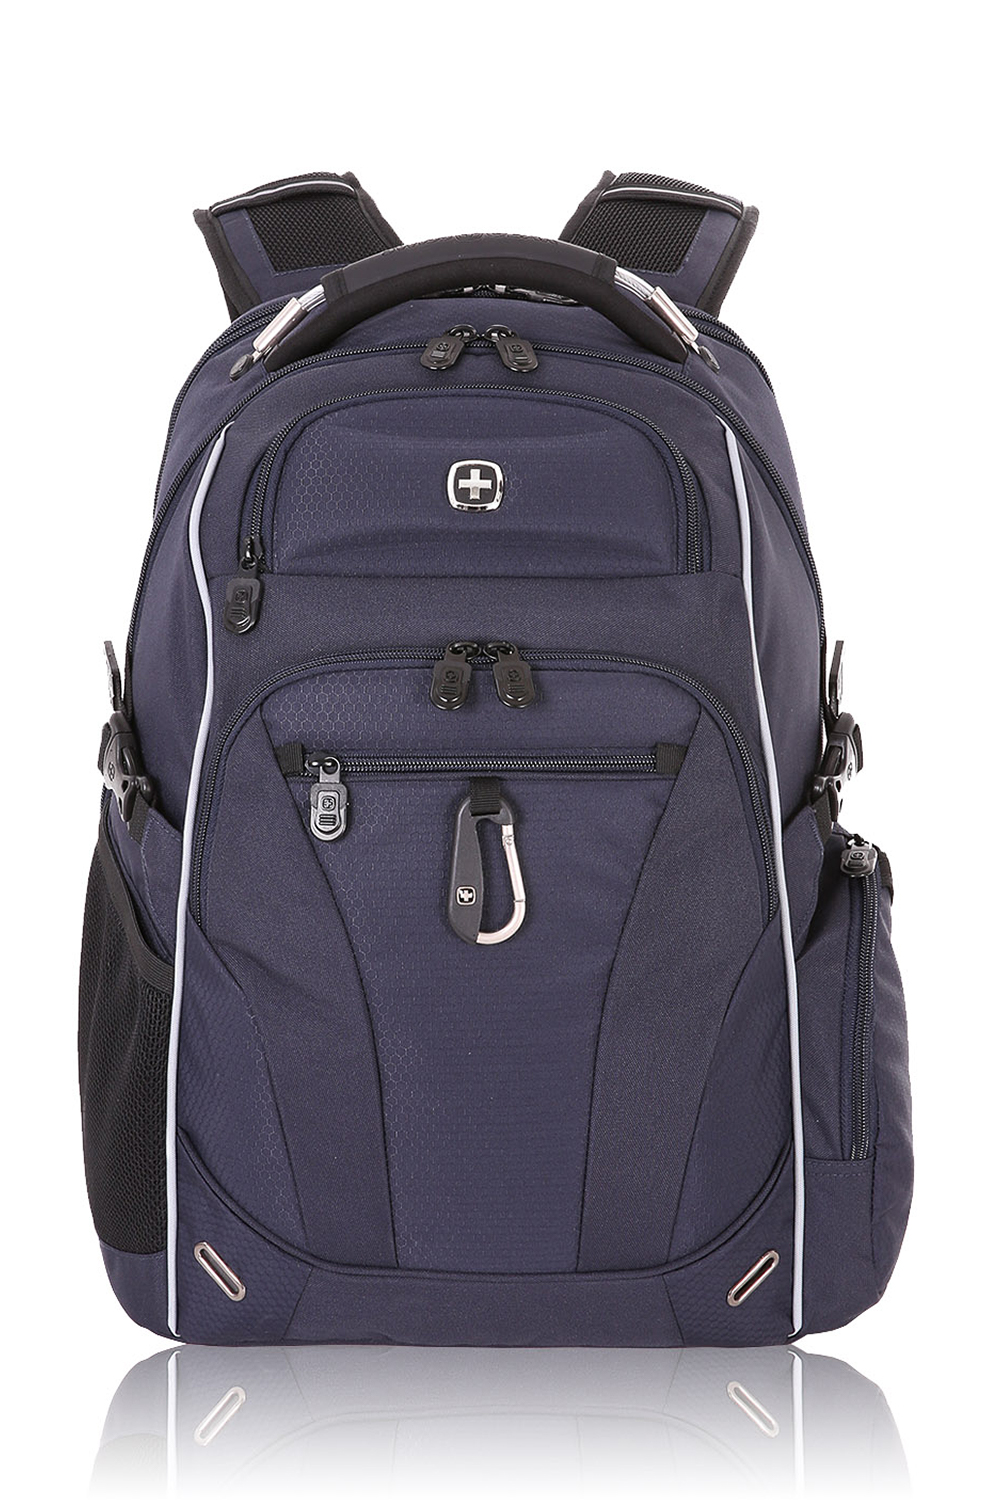 Swissgear 6752 ScanSmart Laptop Backpack - Special Edition